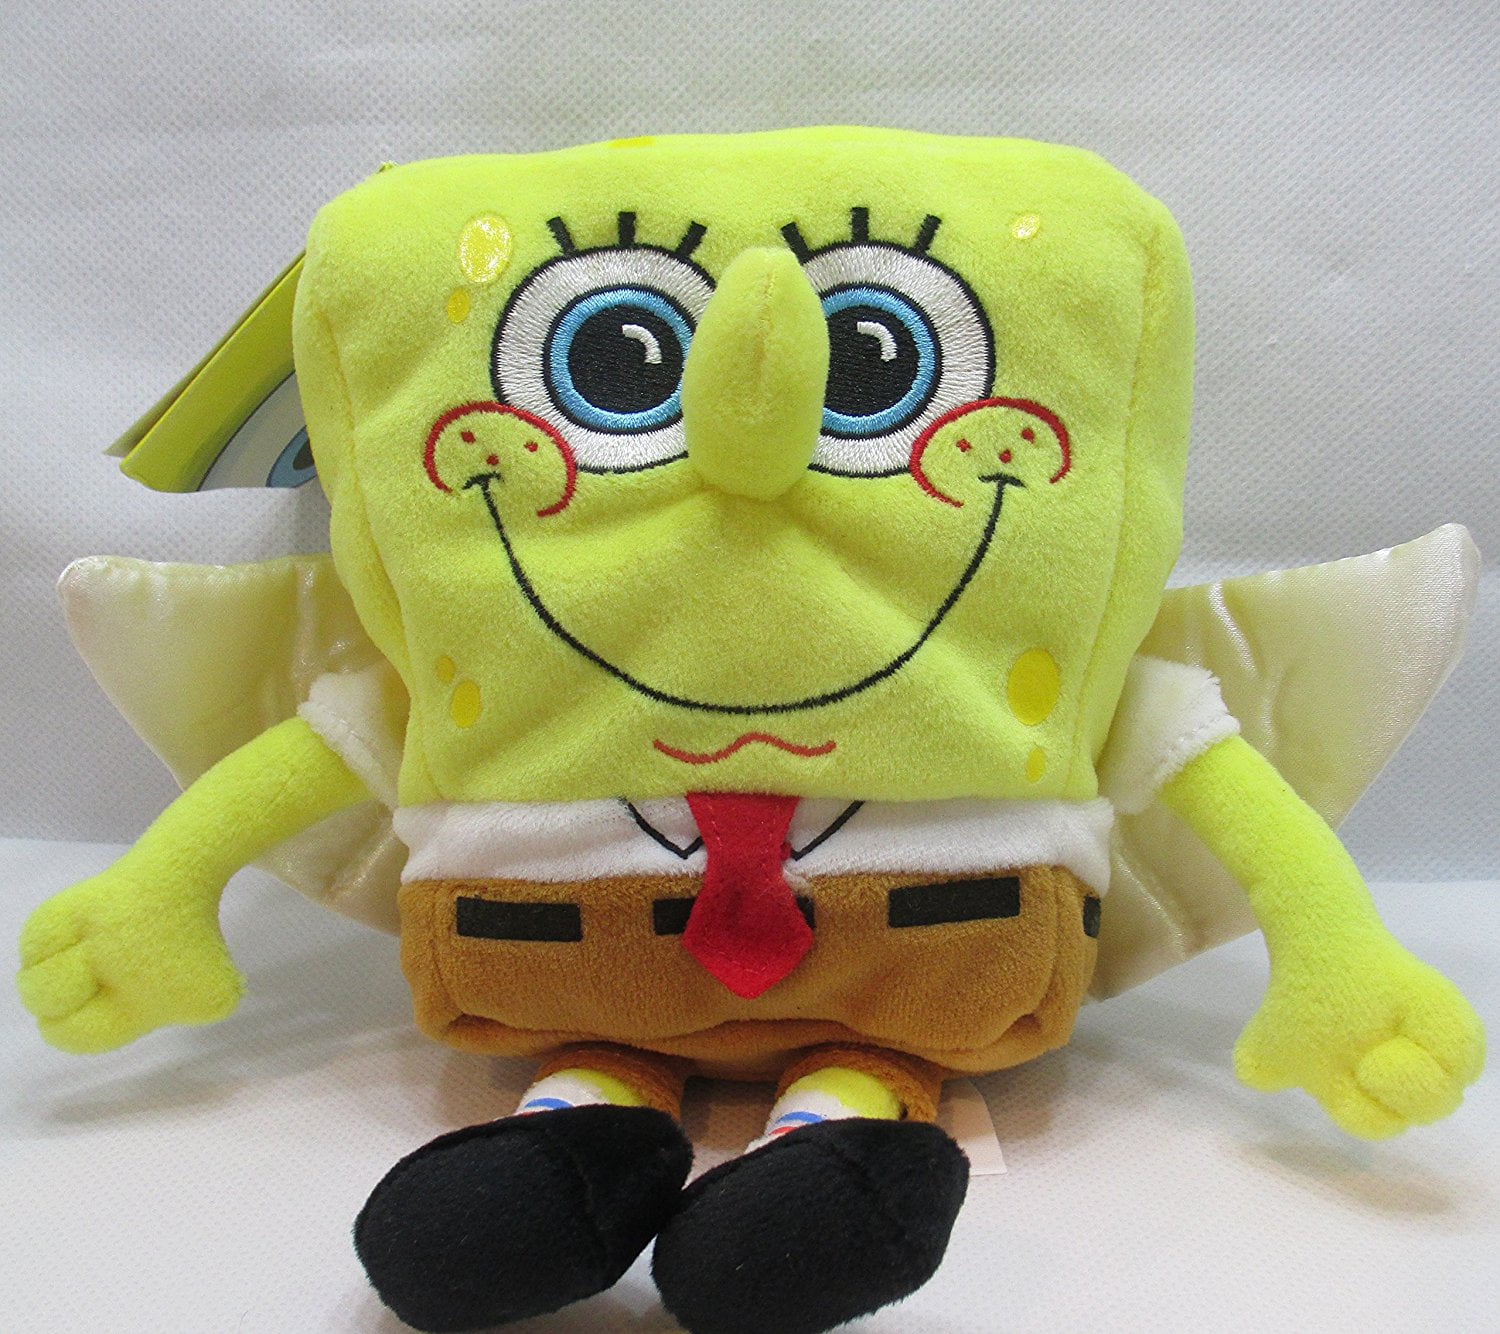 2022-07-04. Nickelodeon SpongeBob Squarepants spongebob plush walmart. 